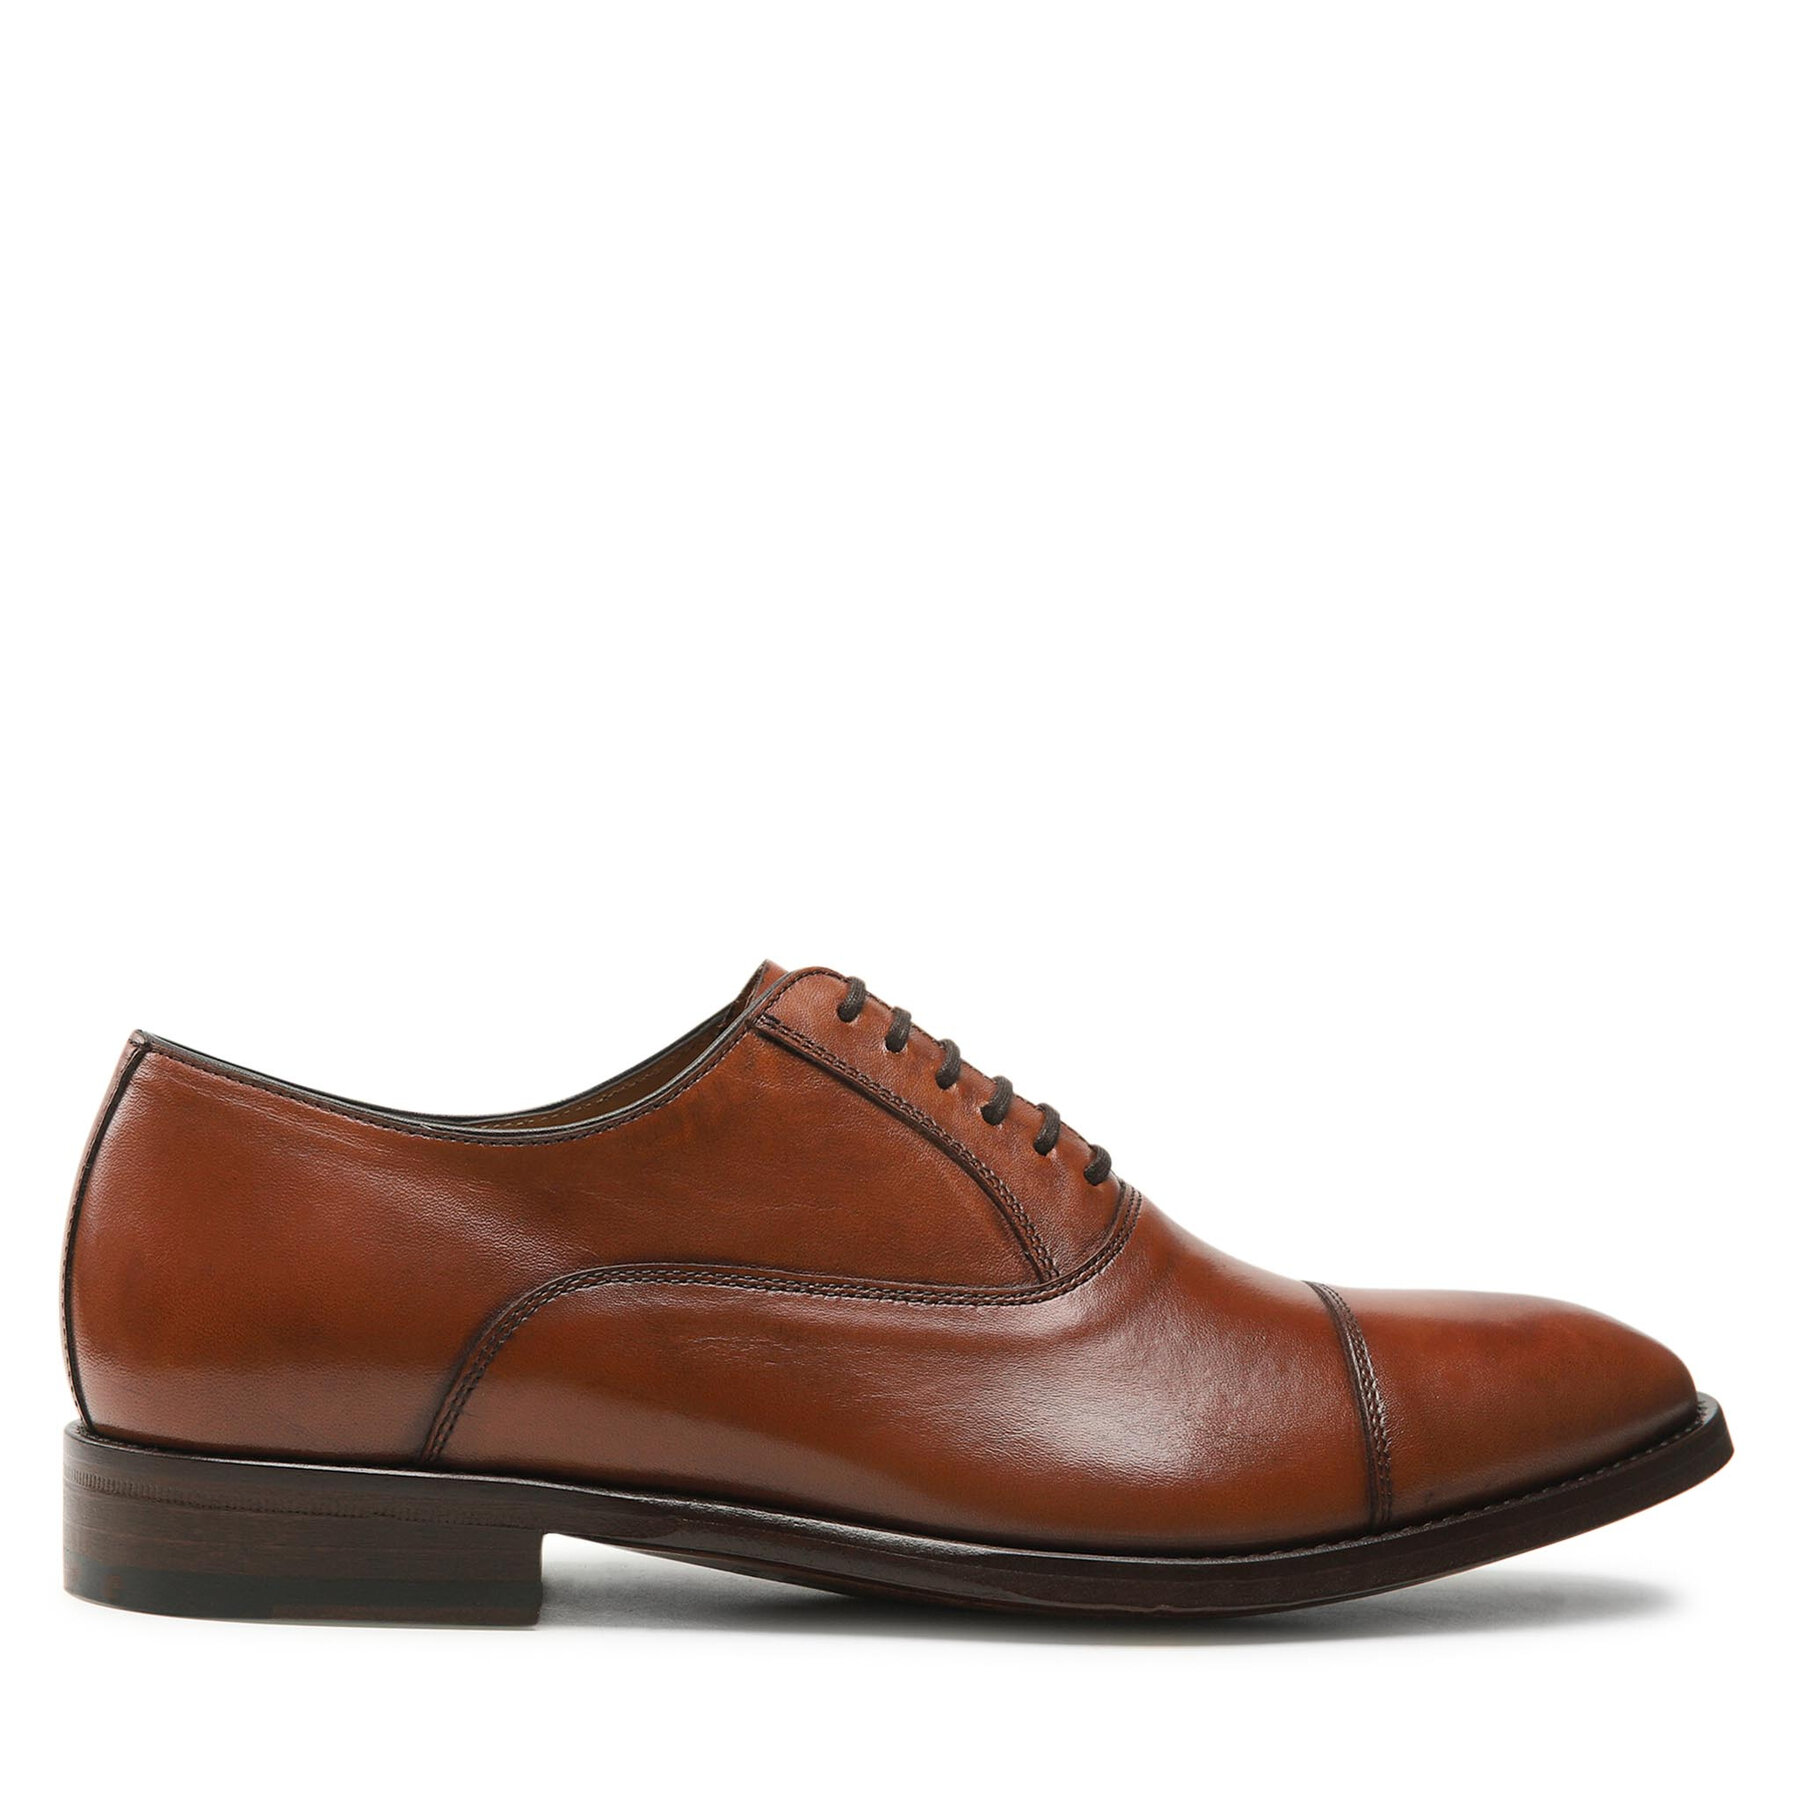 Cipele Lord Premium Oxford 5500 Light Brown L03